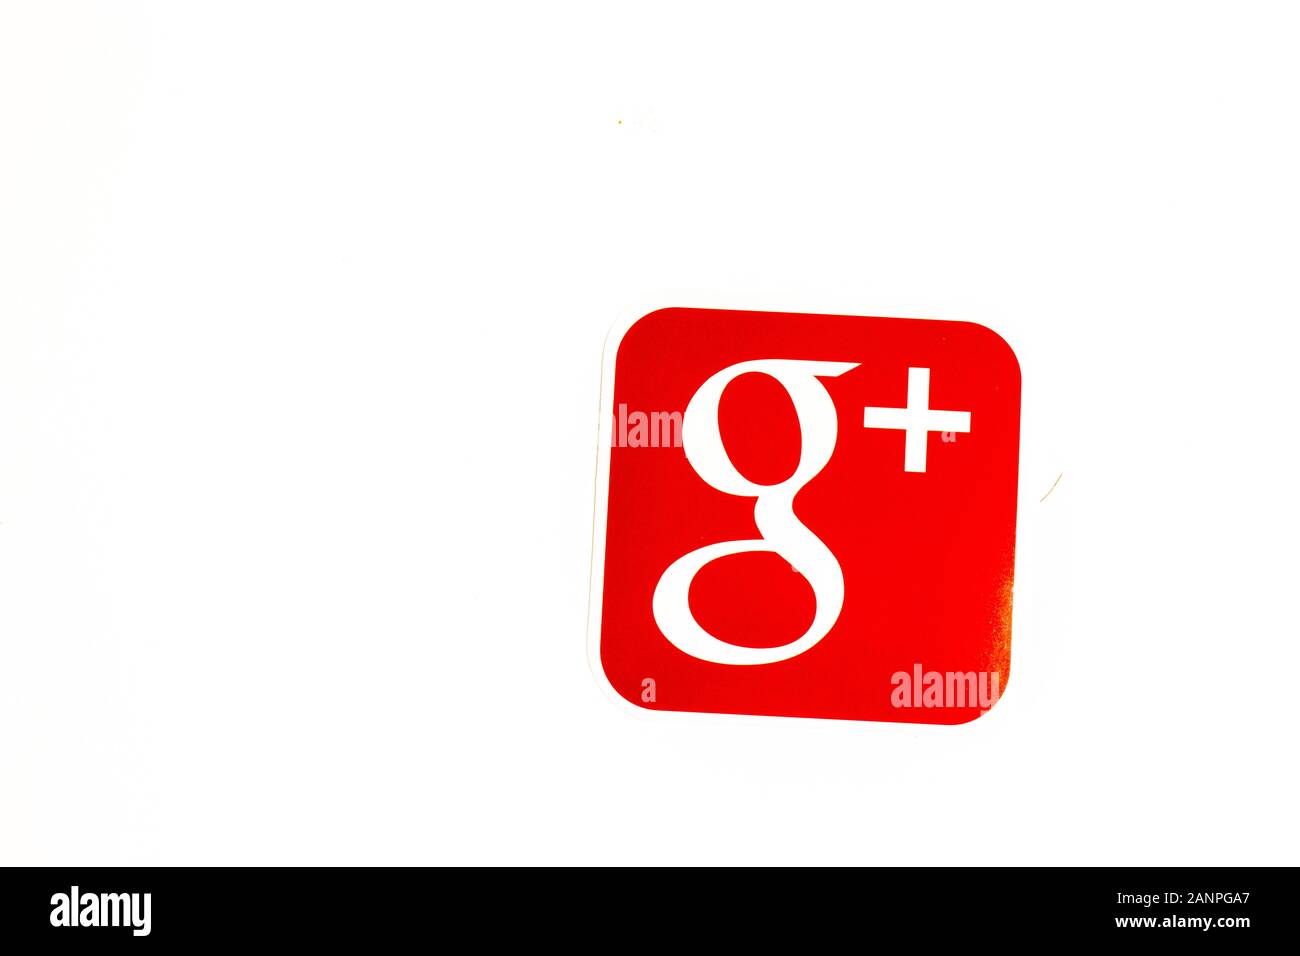 Los Angeles, California, USA - 17 January 2020: Google Plus logo on white background with copy space. Social media icon, Illustrative Editorial Stock Photo